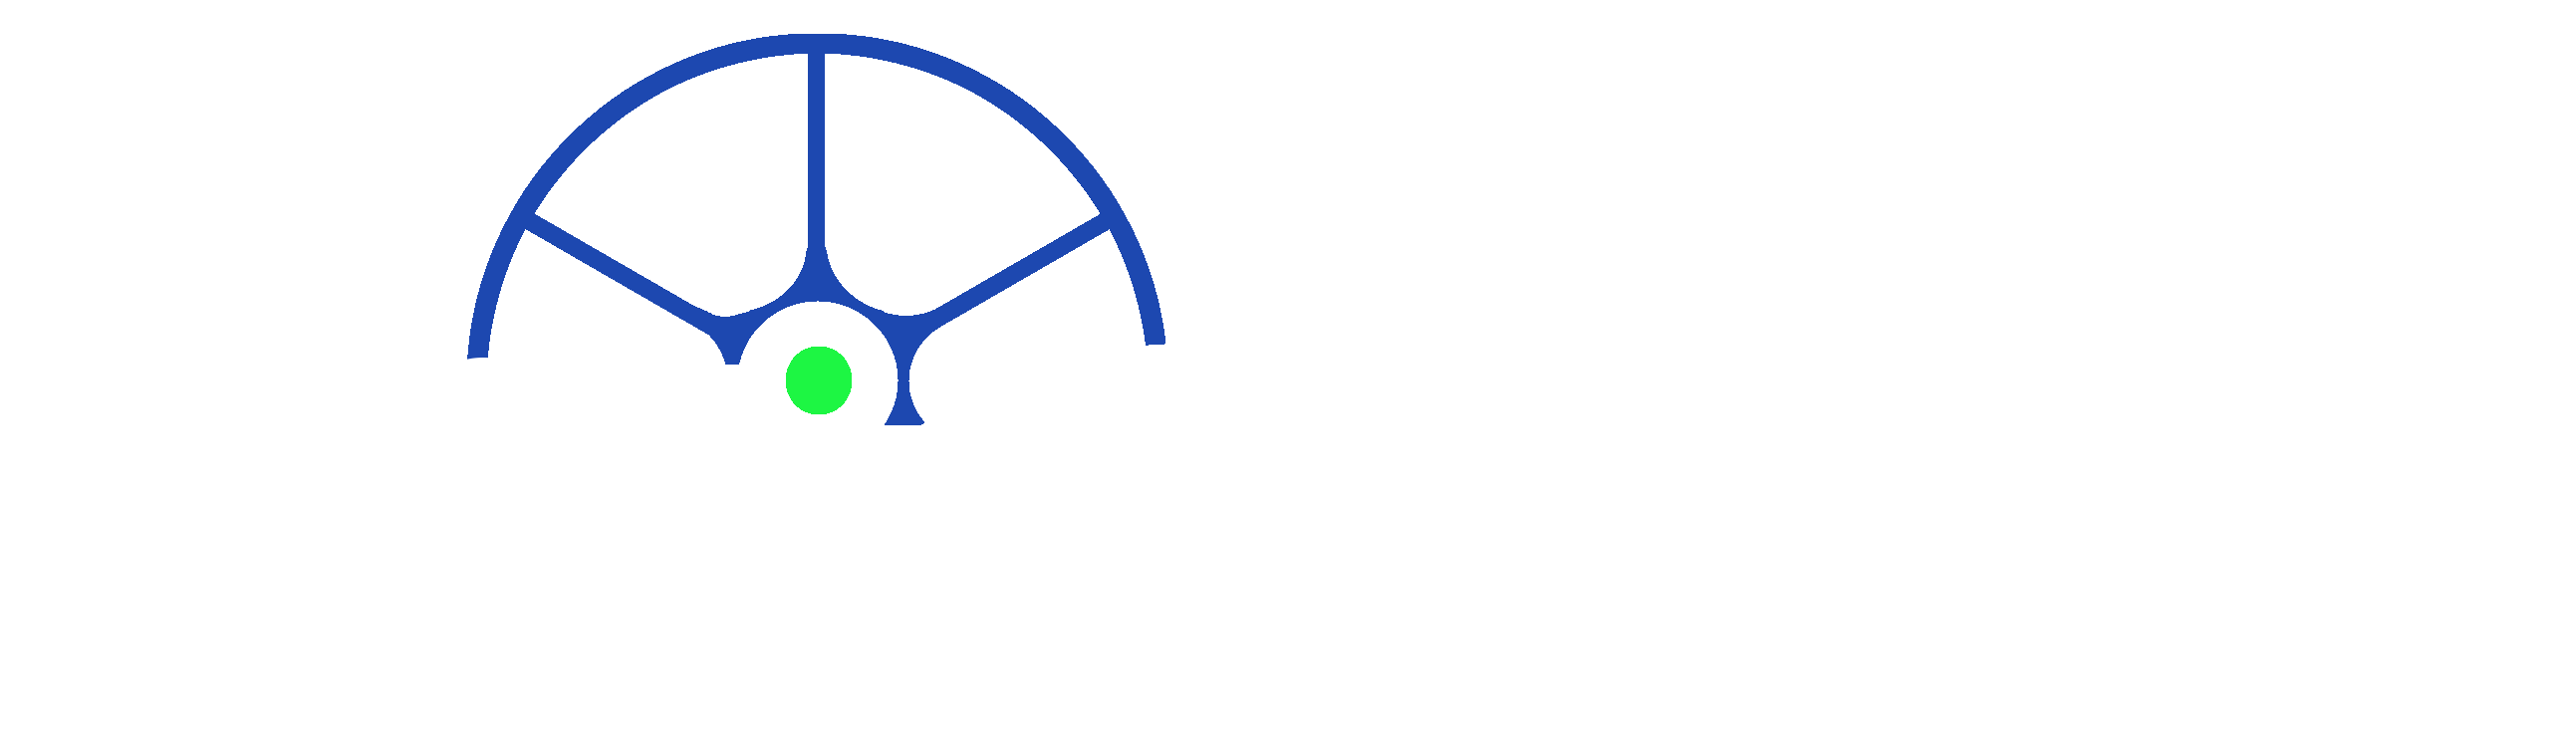 Stainless Motors, Inc. Home of SMWindings Custom Motor Windings Logo